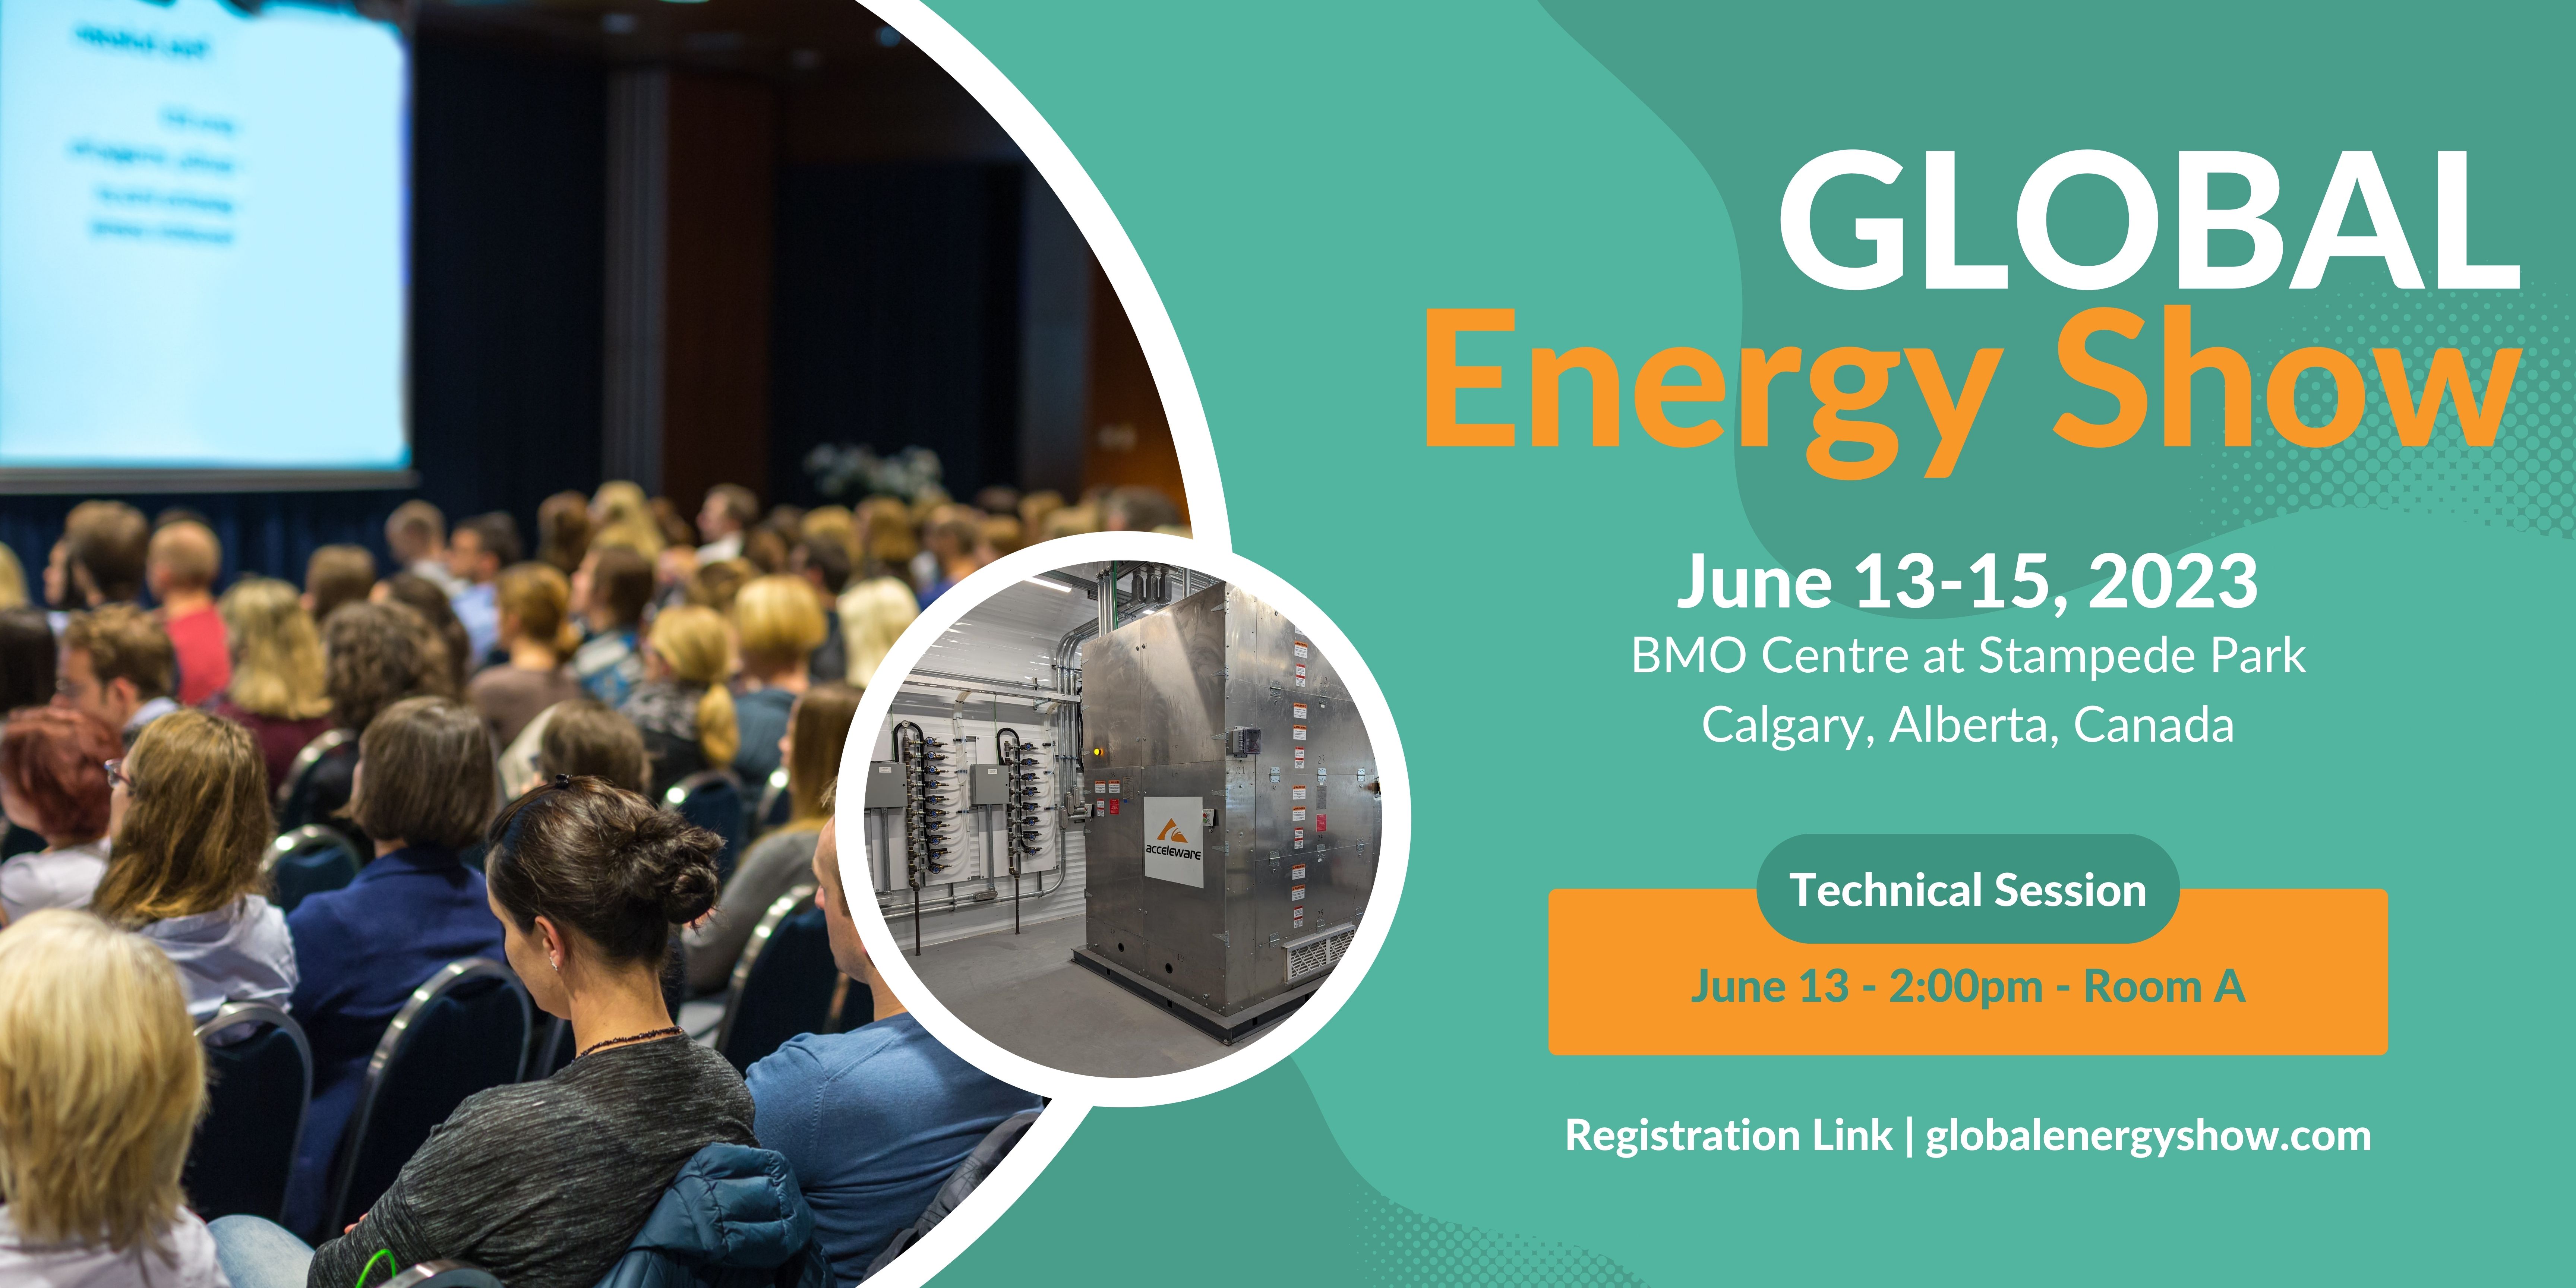 Global Energy Show 2023 - Calgary, Alberta, Canada